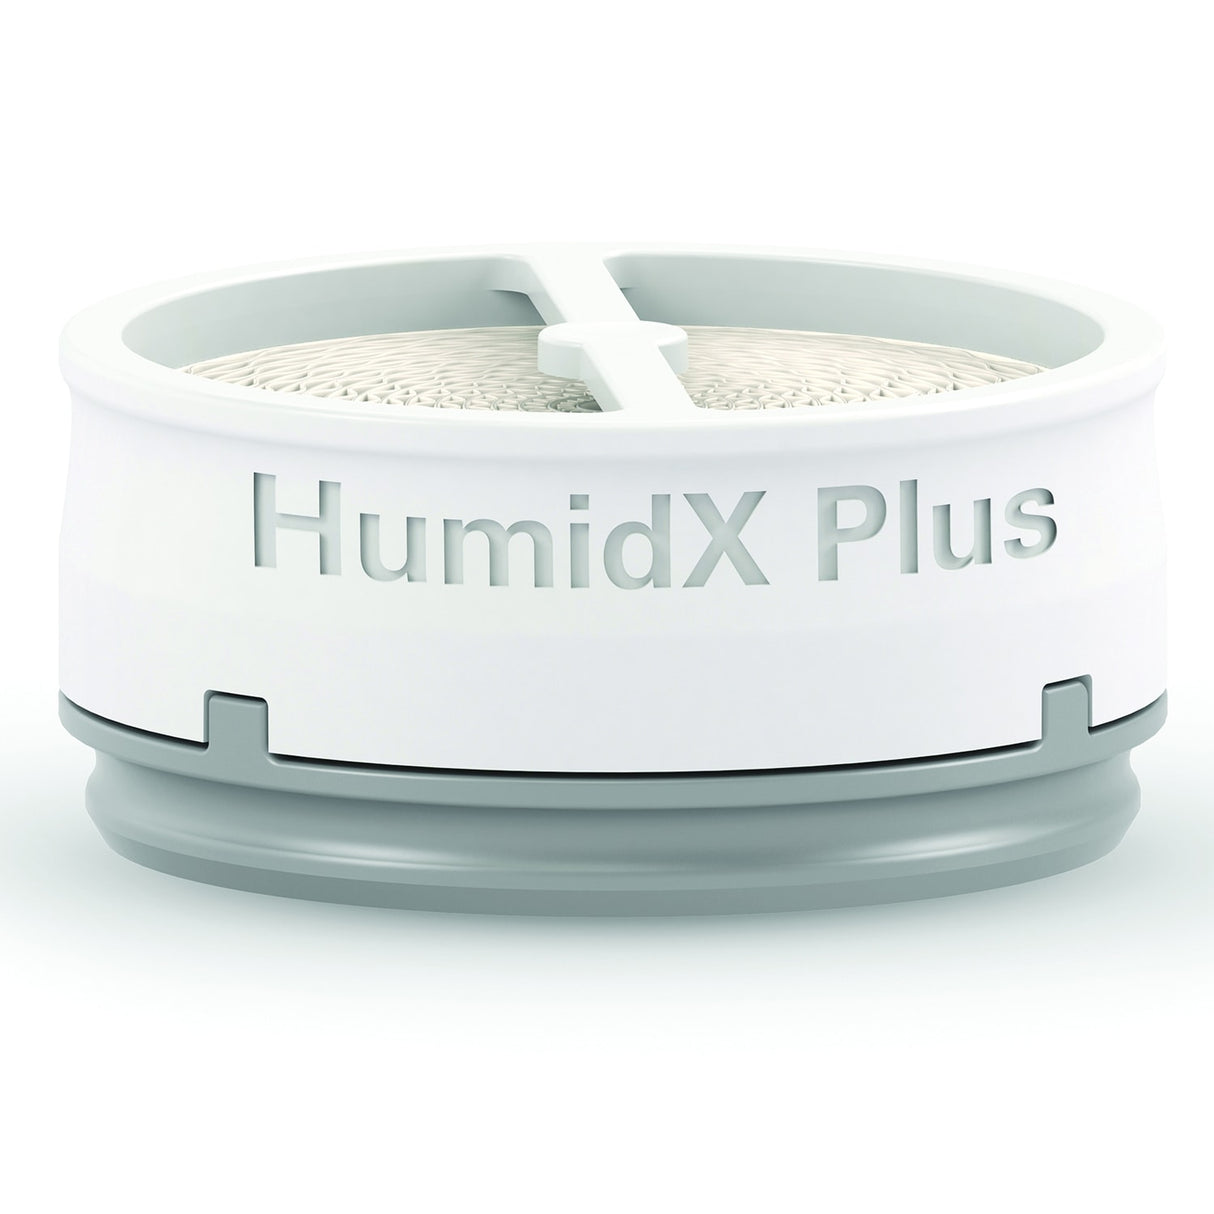 AirMini™ HumidX Plus Filter 3 Pack | CPAP Superstore Canada